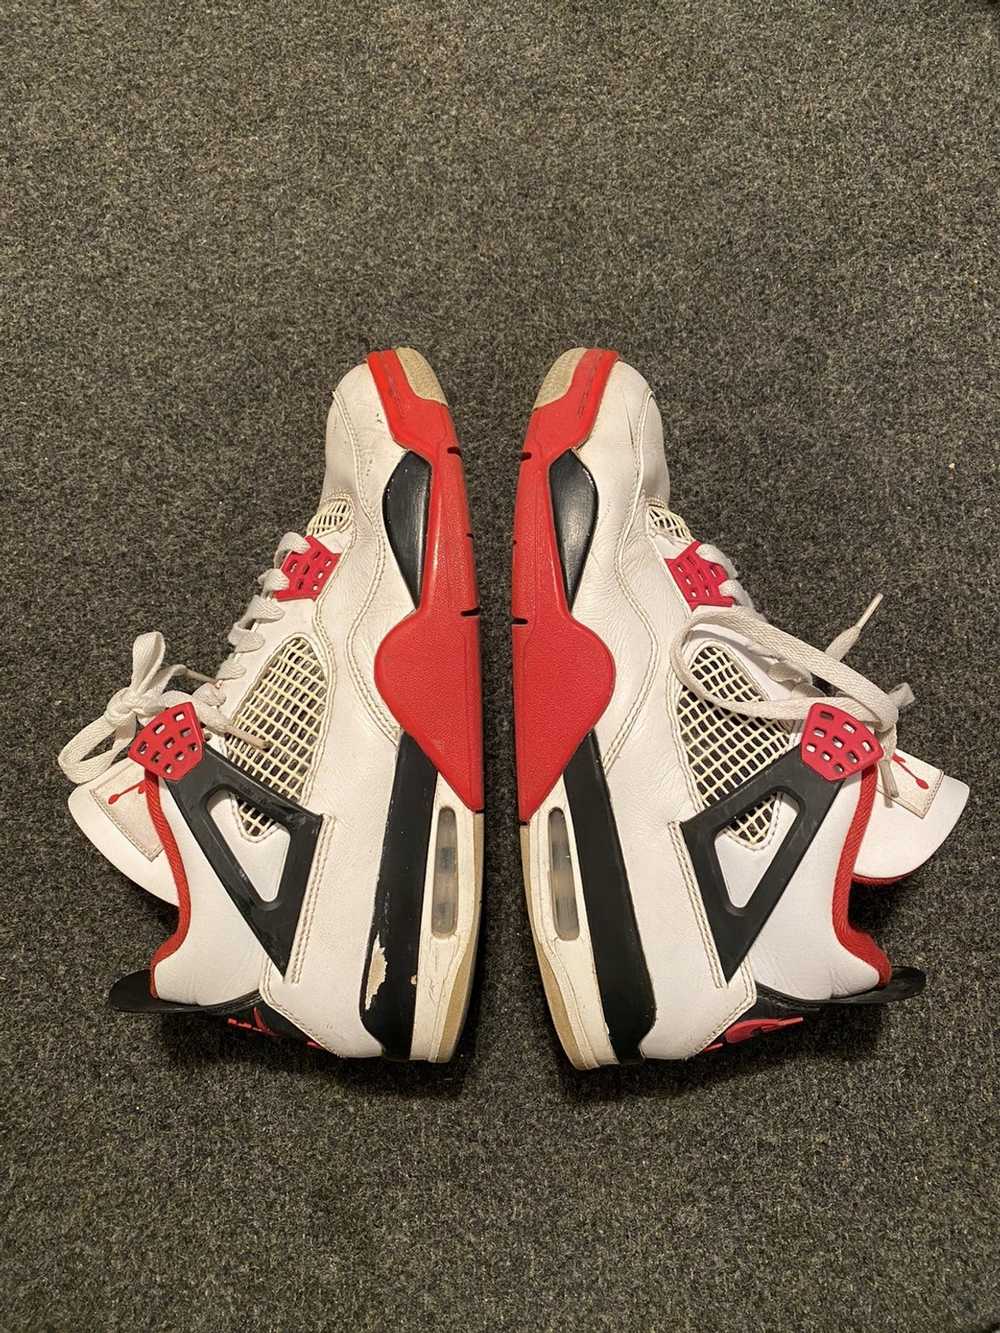 Jordan Brand Jordan 4 Fire Reds "2020" - image 2